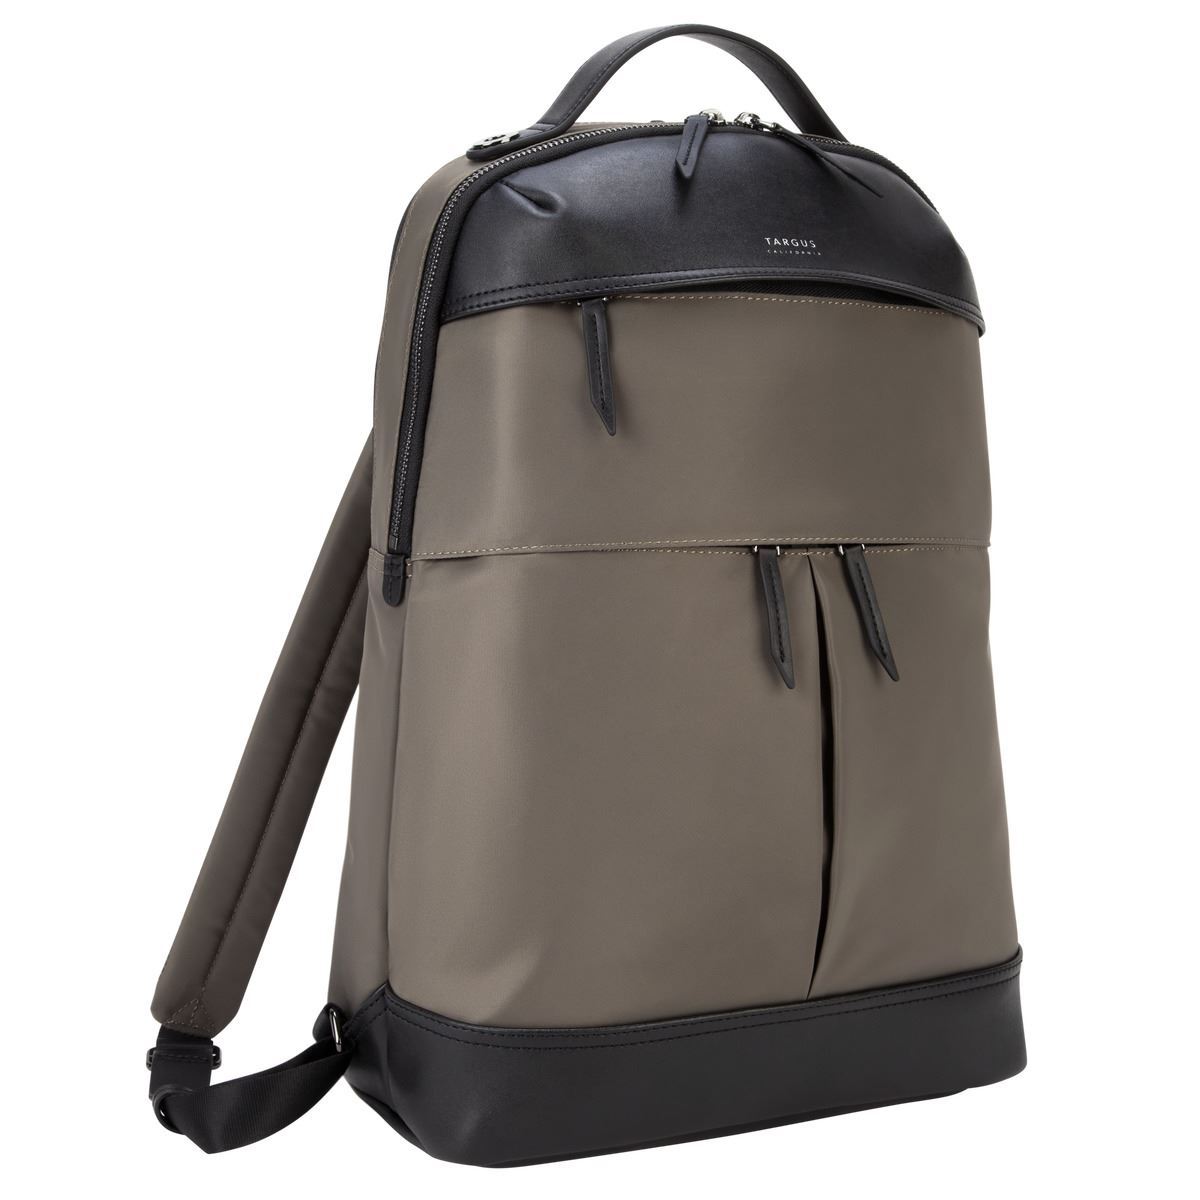 Newport 15" Laptop Backpack -